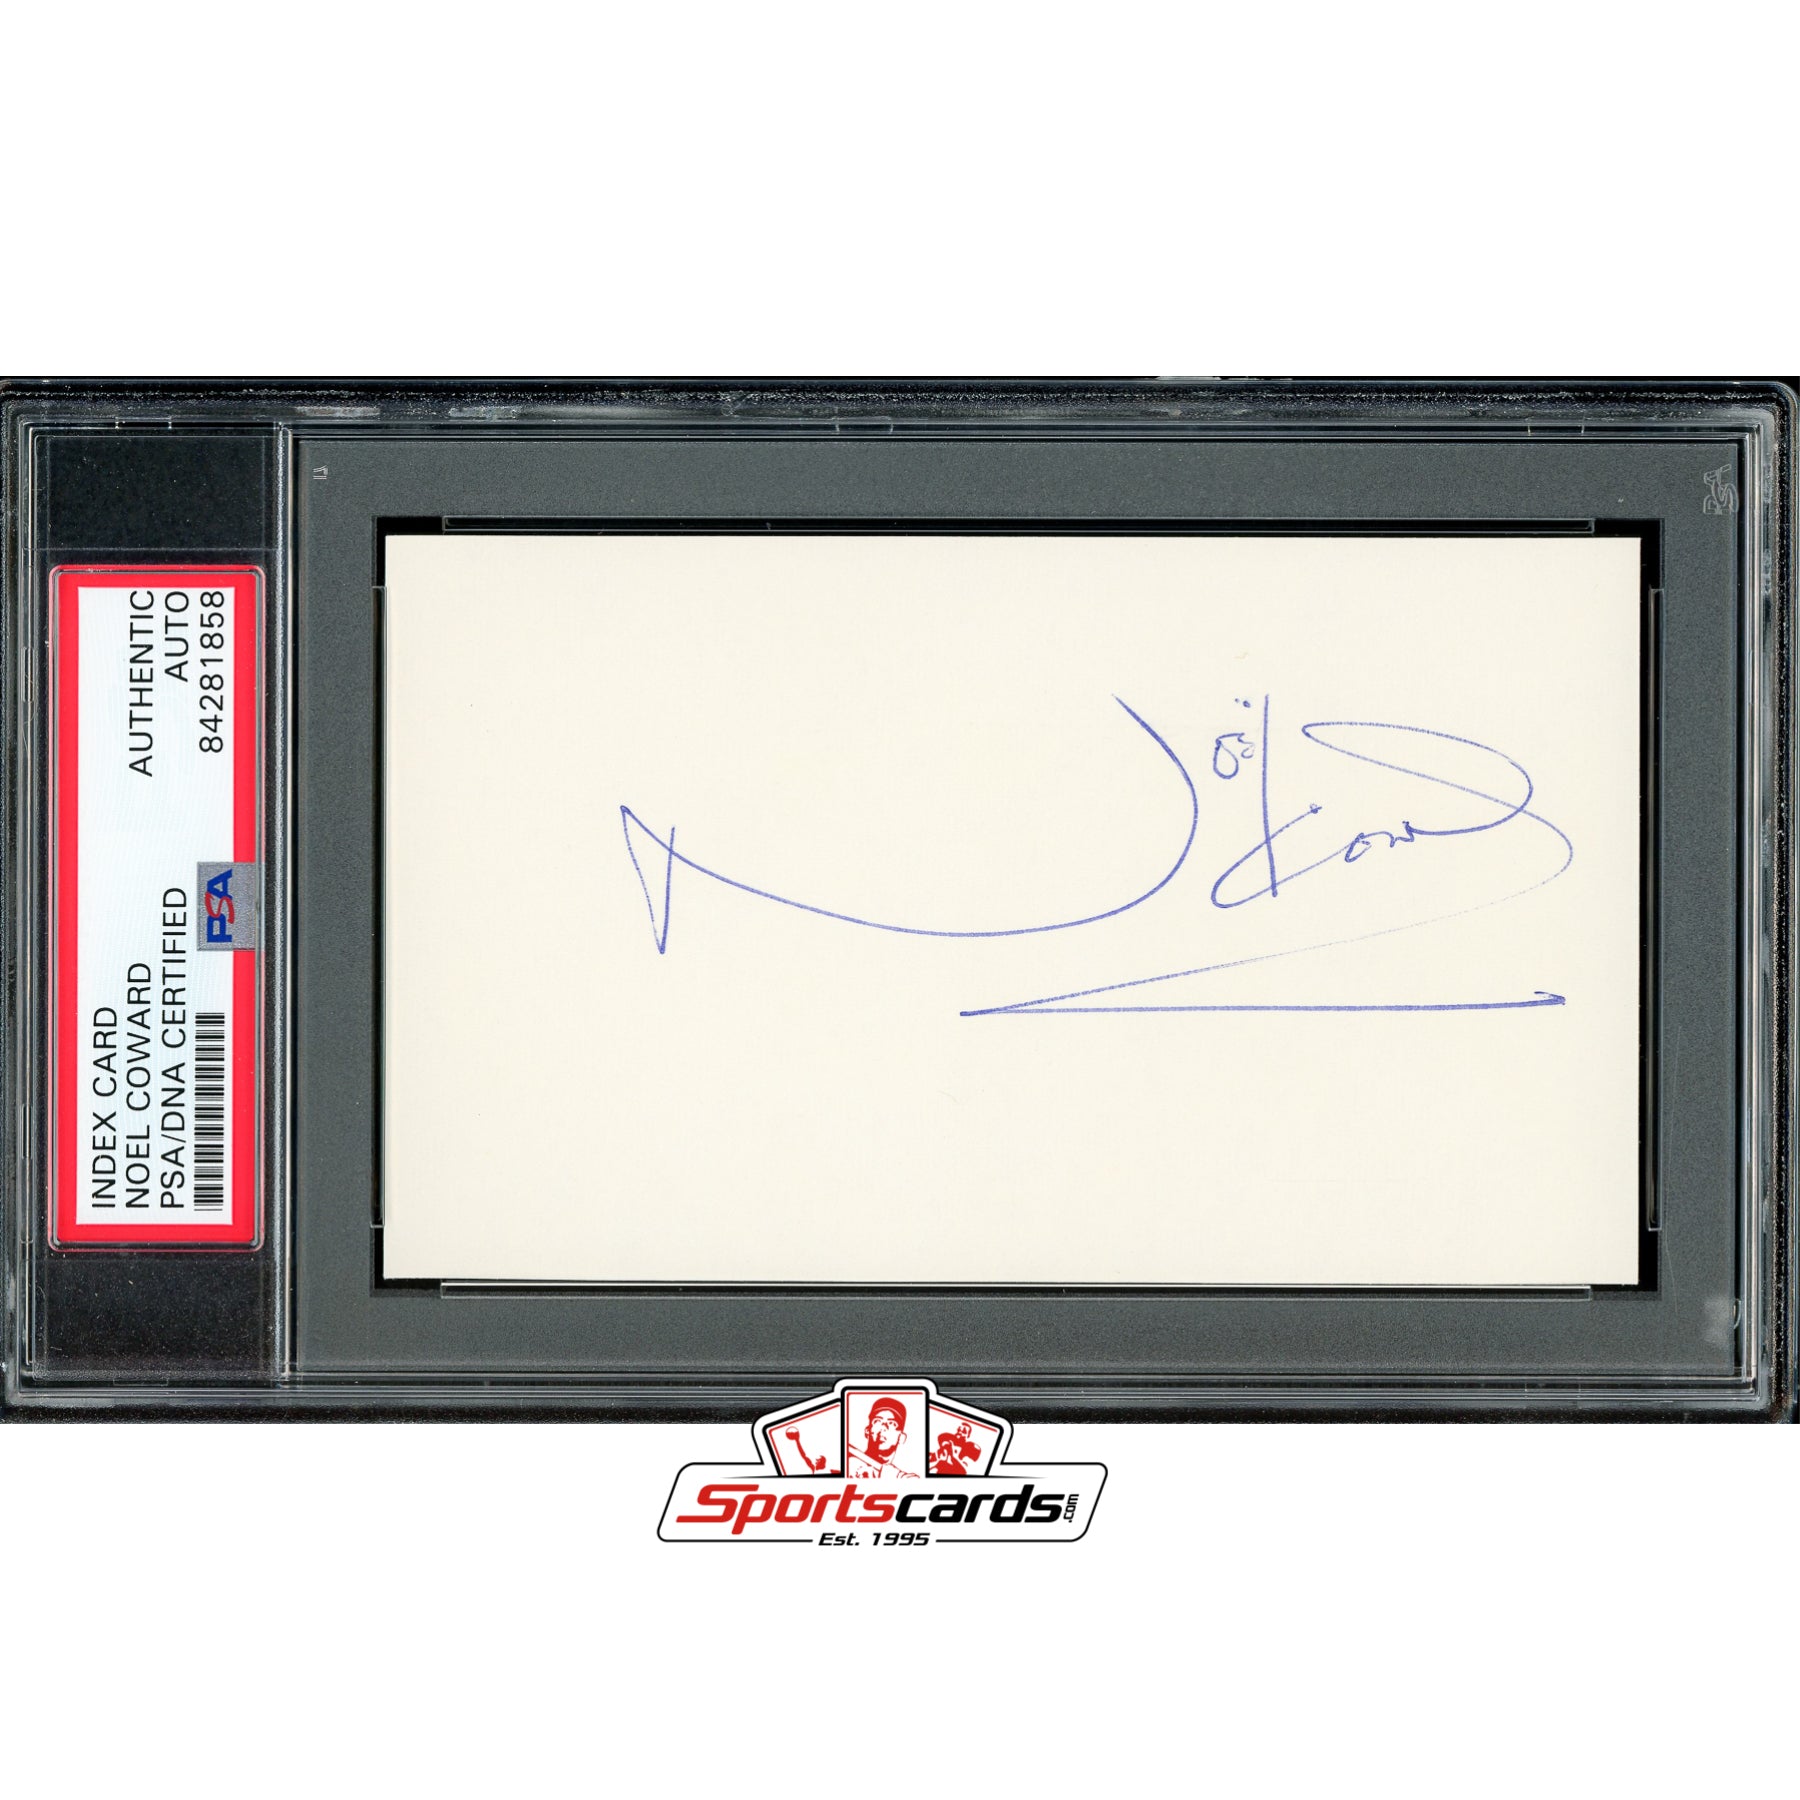 Noel Coward (d.1973) Signed 3x5 Index Card Autograph PSA/DNA